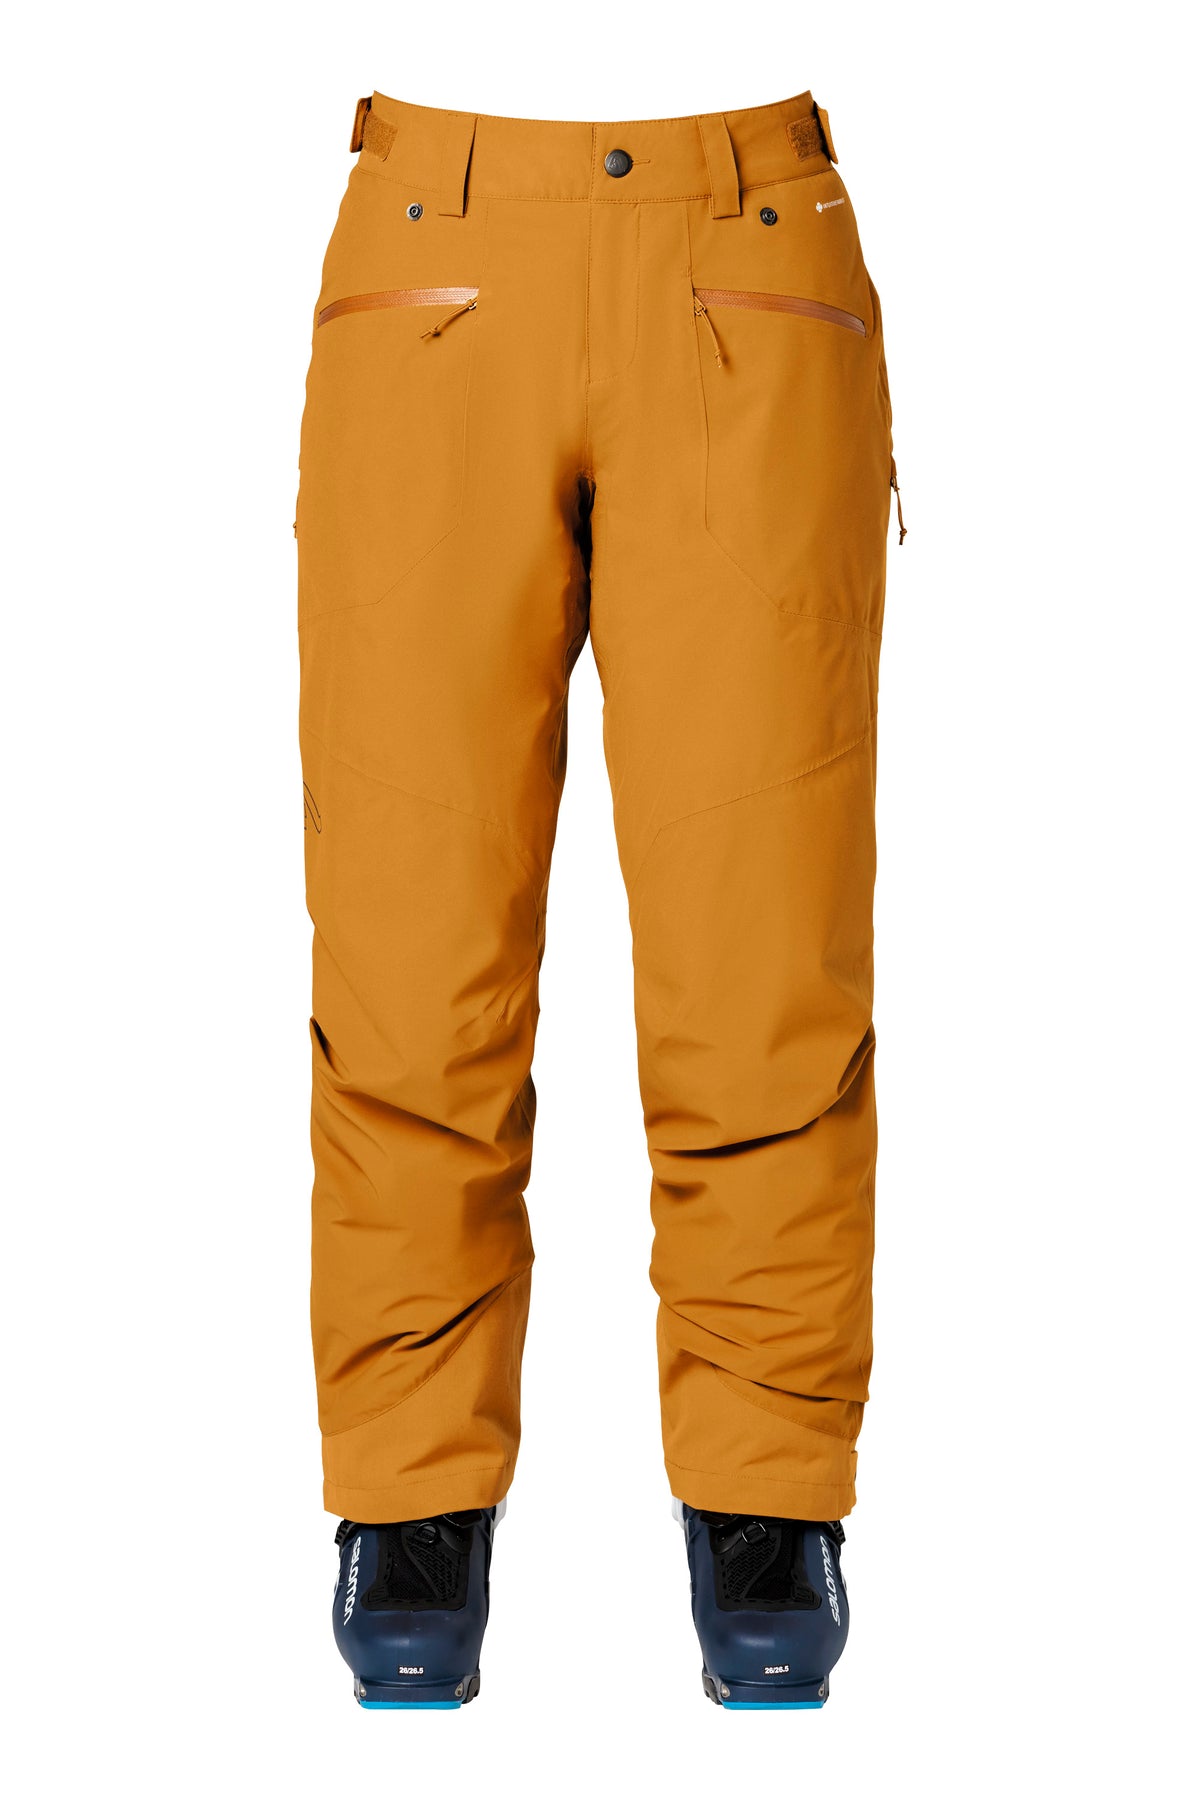 Bergans Oppdal Insulated trousers, Orion Blue - MTBIKER.shop